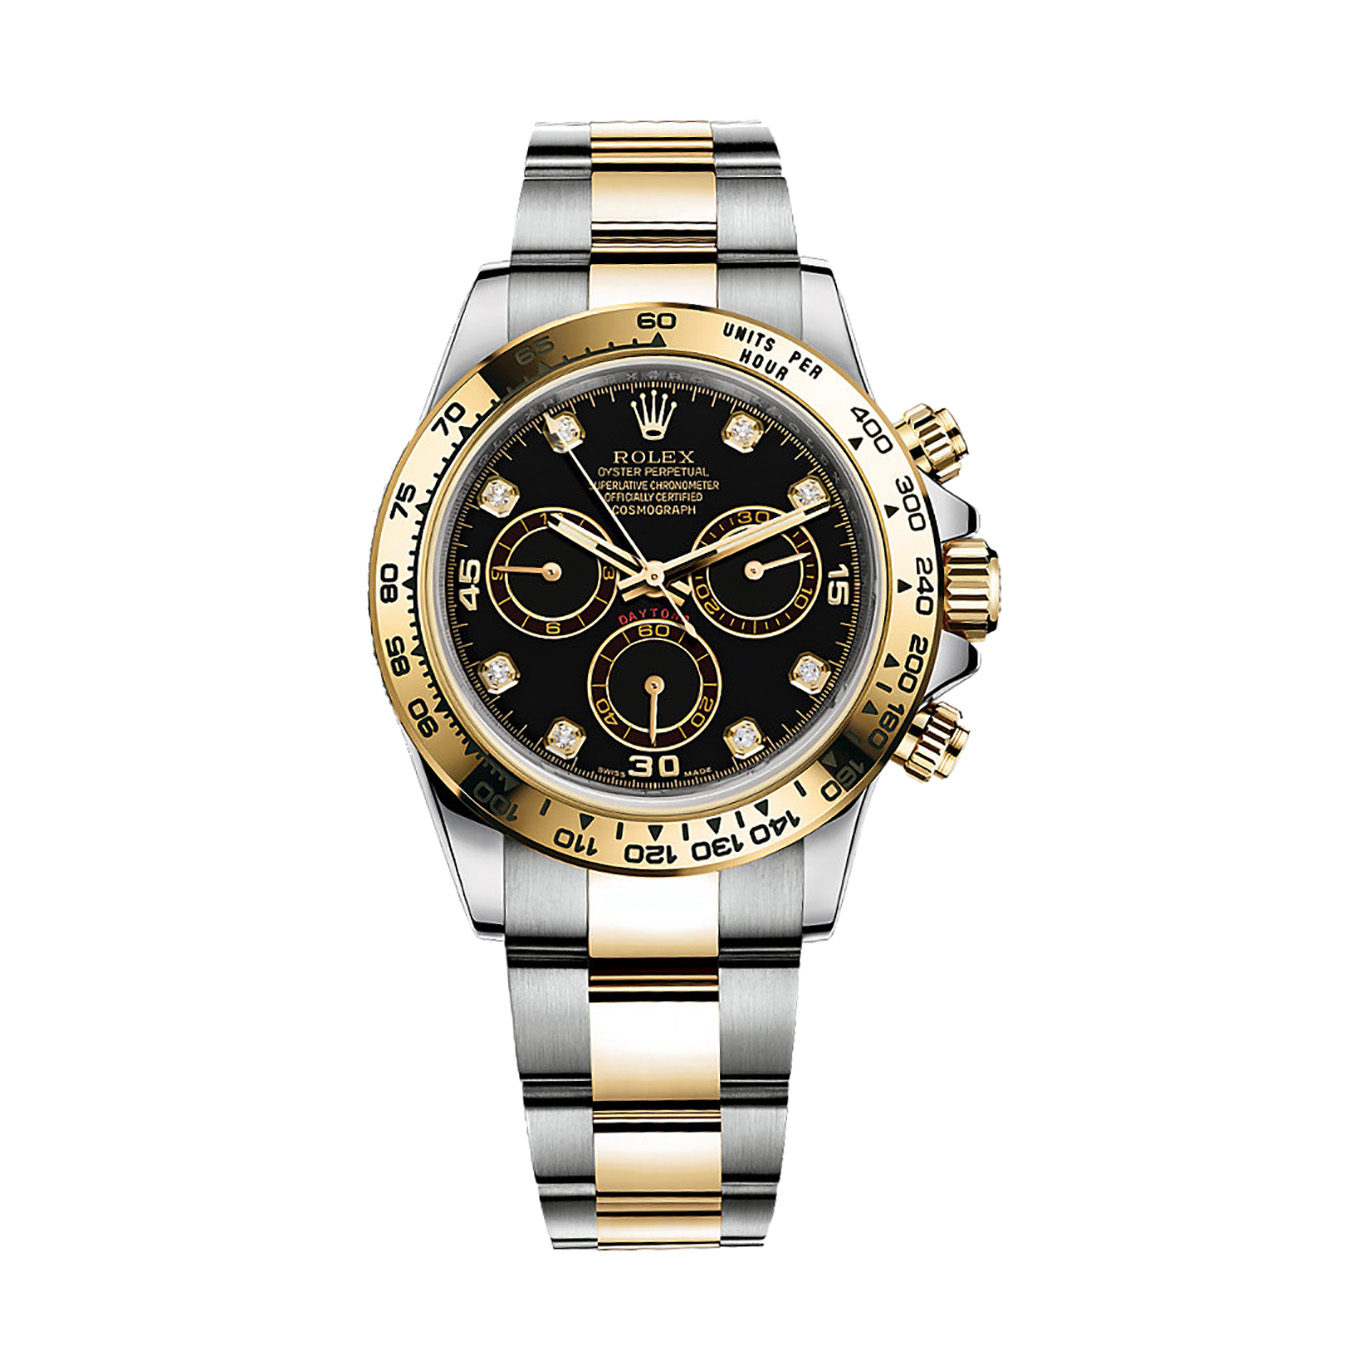 Cosmograph Daytona 116503 Gold & Stainless Steel Watch (Black Set With Diamonds)